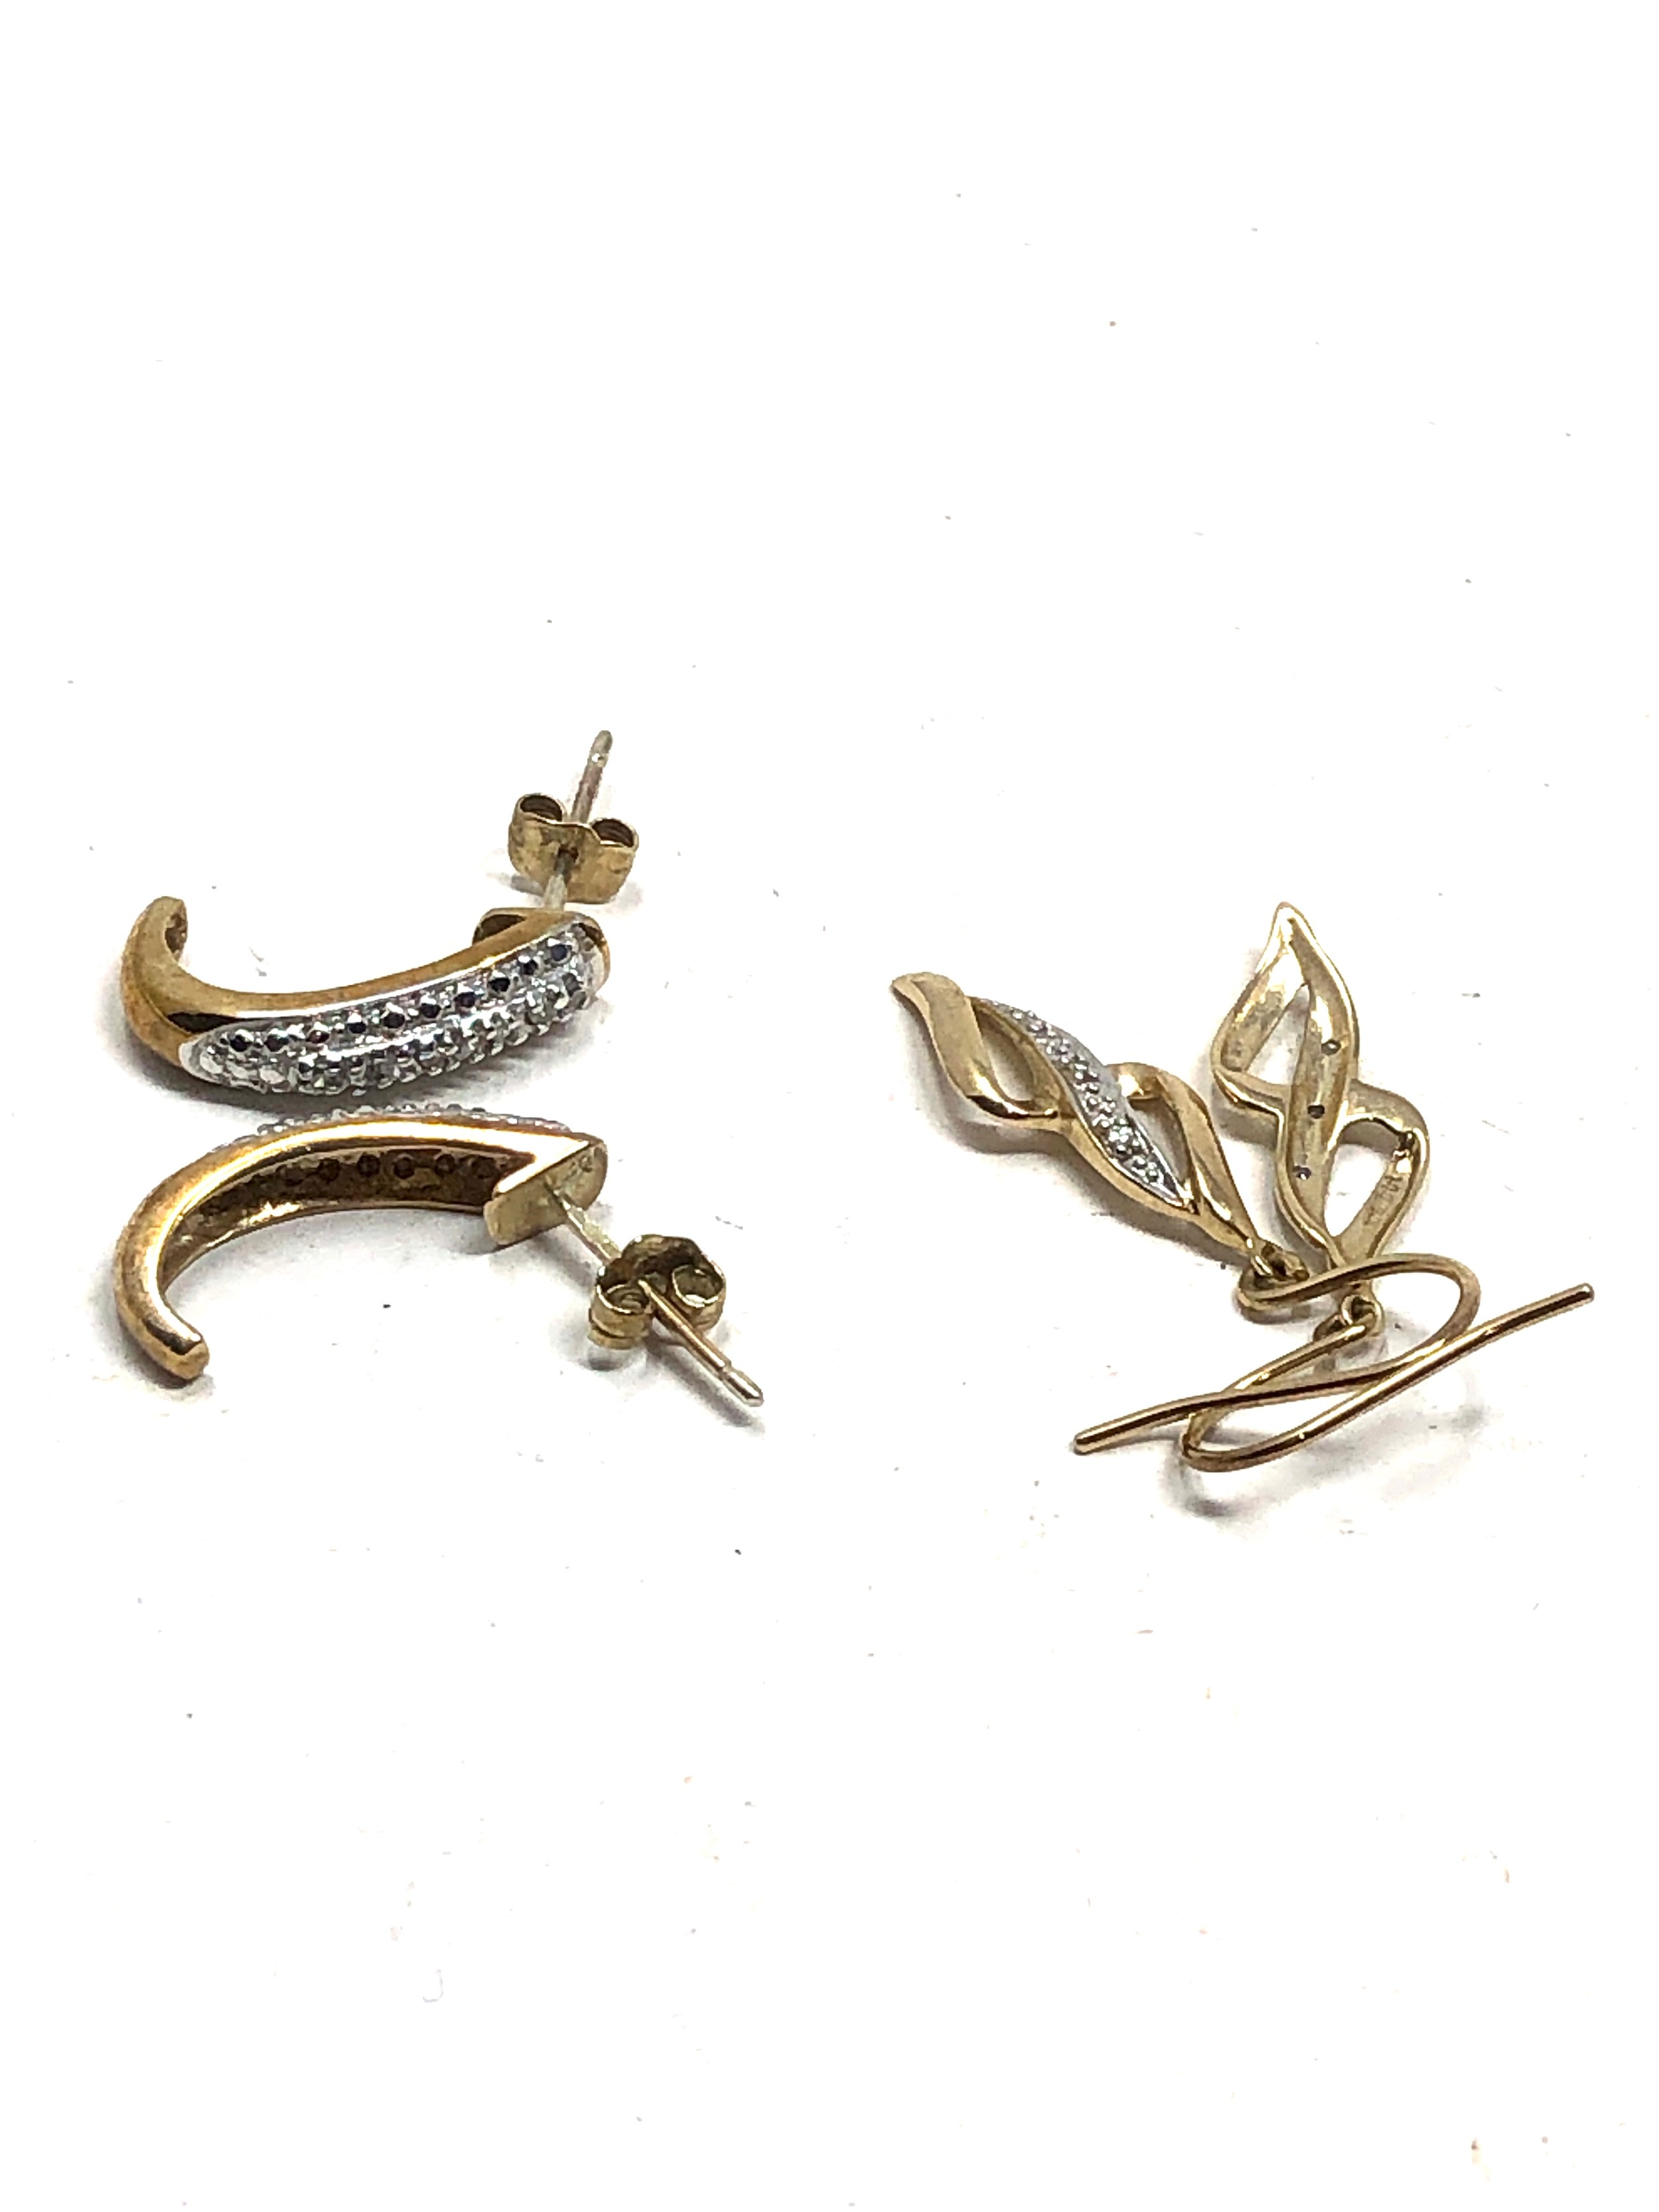 2 x 9ct gold vintage diamond drop earrings (3.2g) - Image 2 of 3